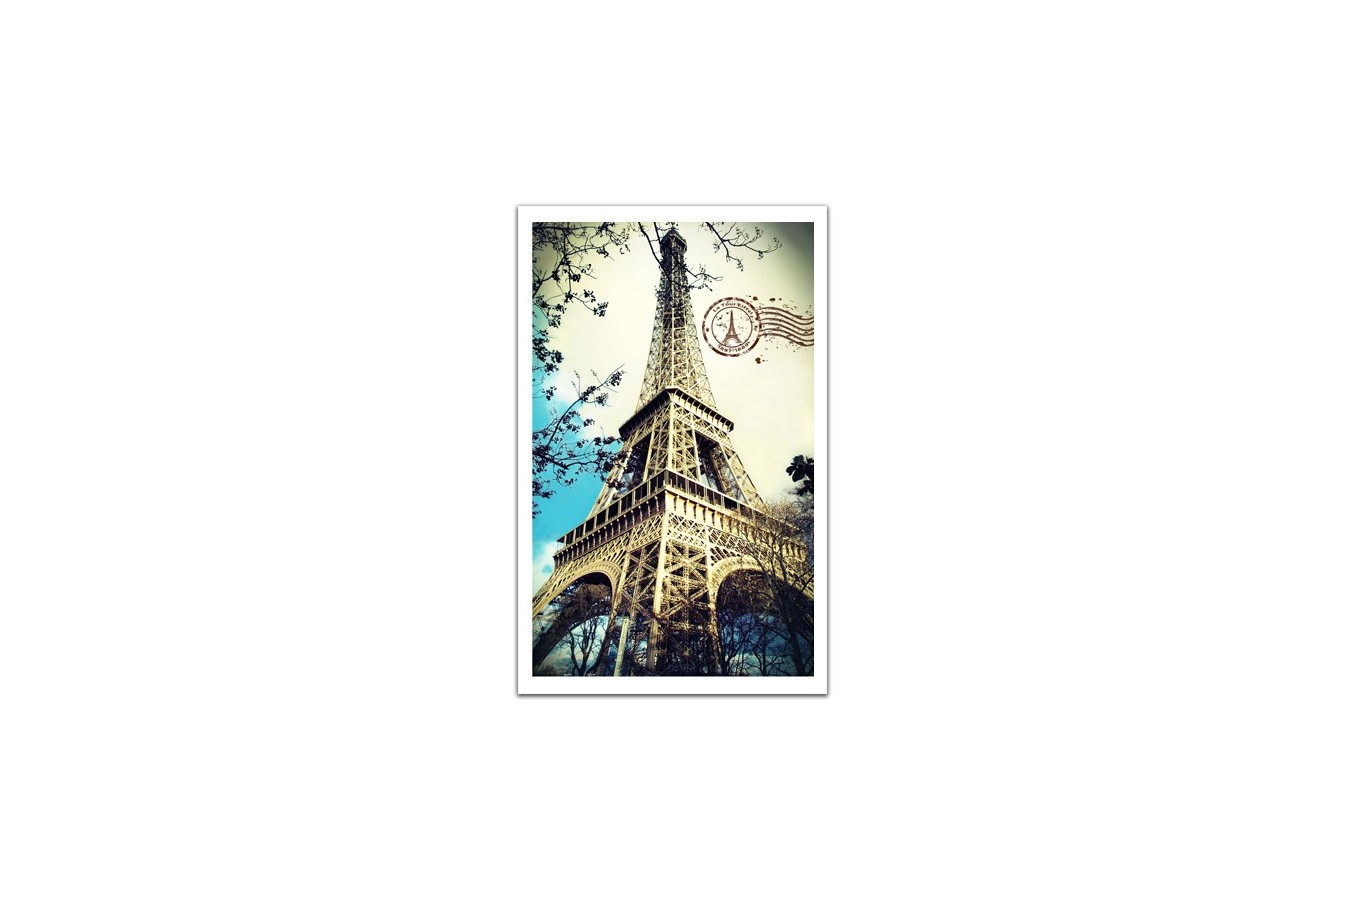 Puzzle din plastic Pintoo - France, Paris: The Eiffel Tower, 1000 piese (H1485)